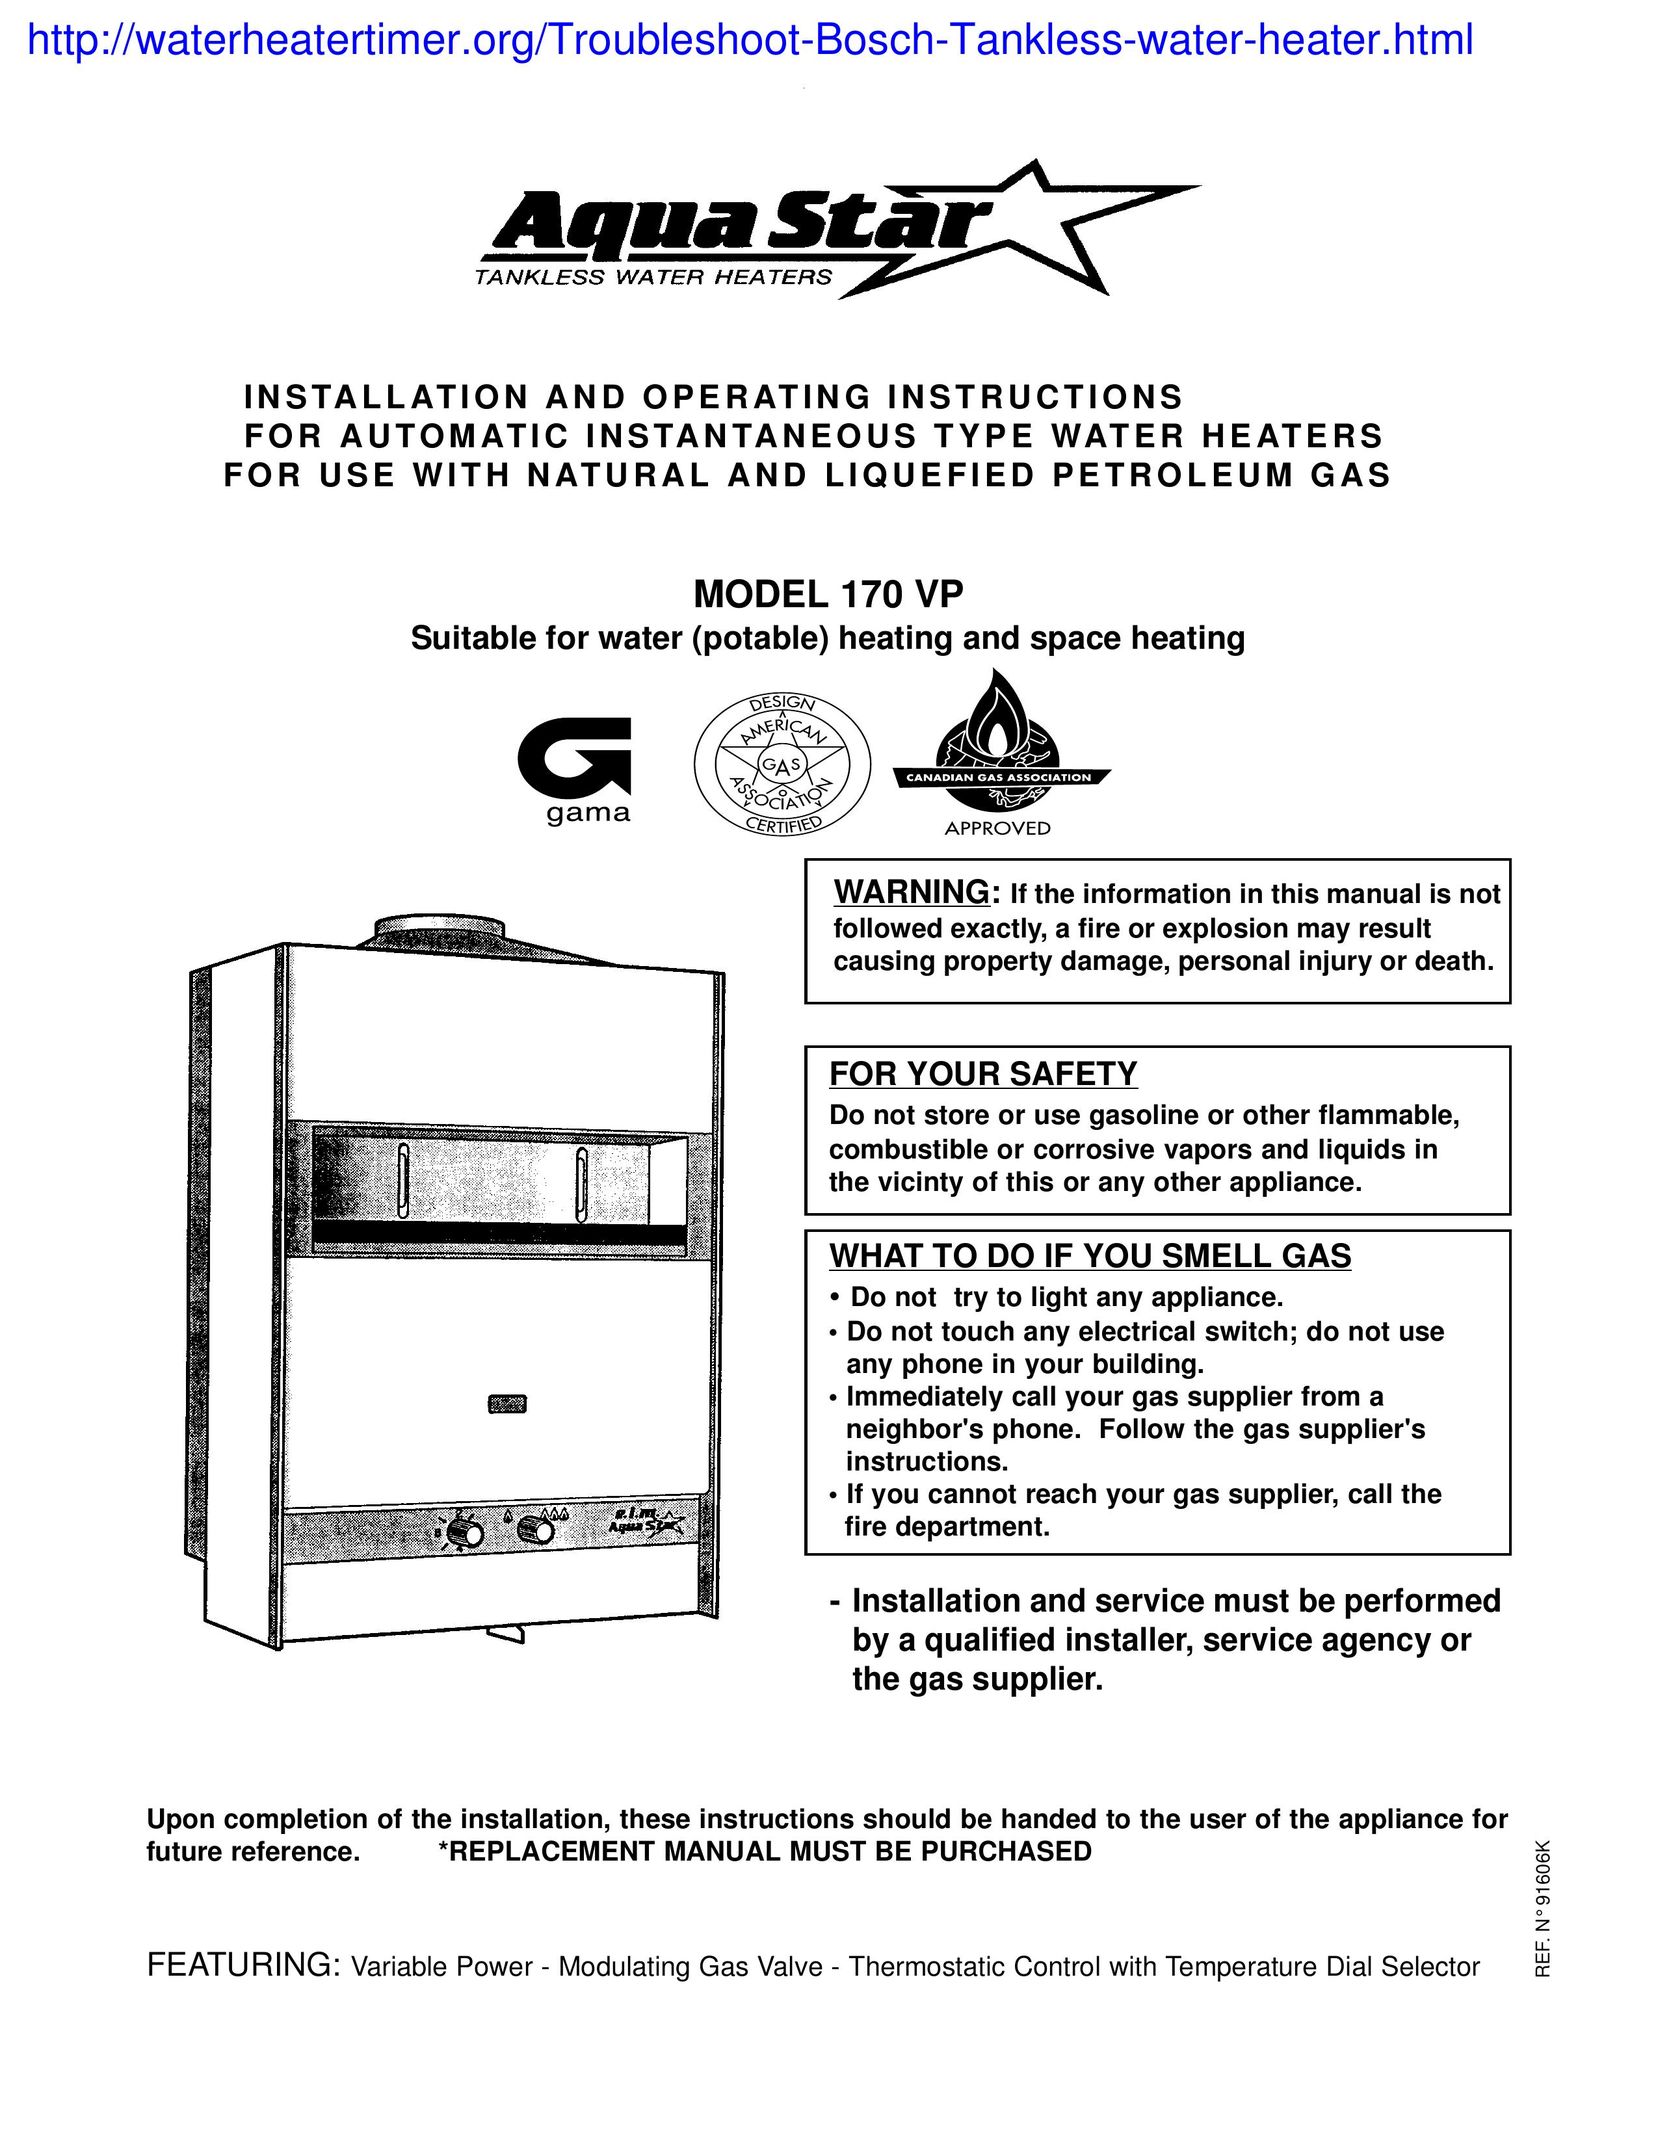 AquaStar 170 VP Water Heater User Manual